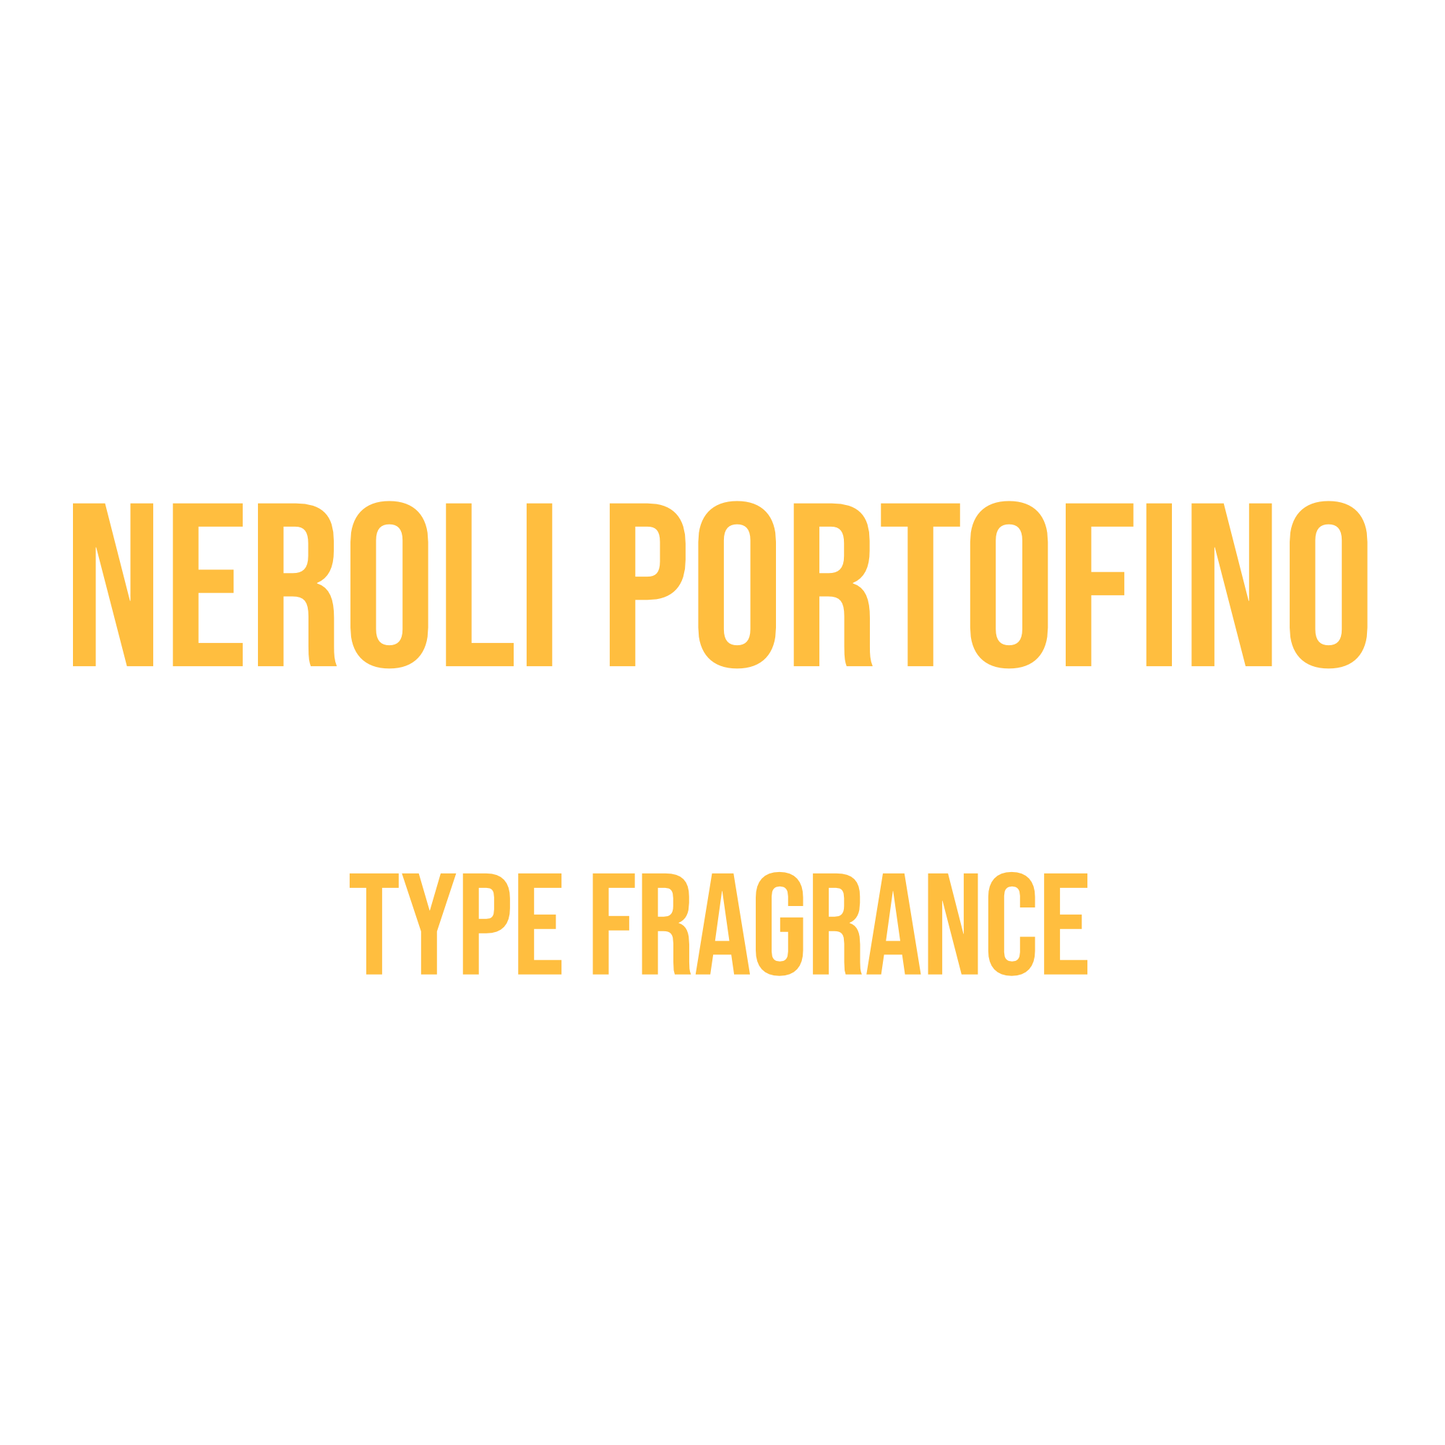 Neroli Portofino Type Fragrance